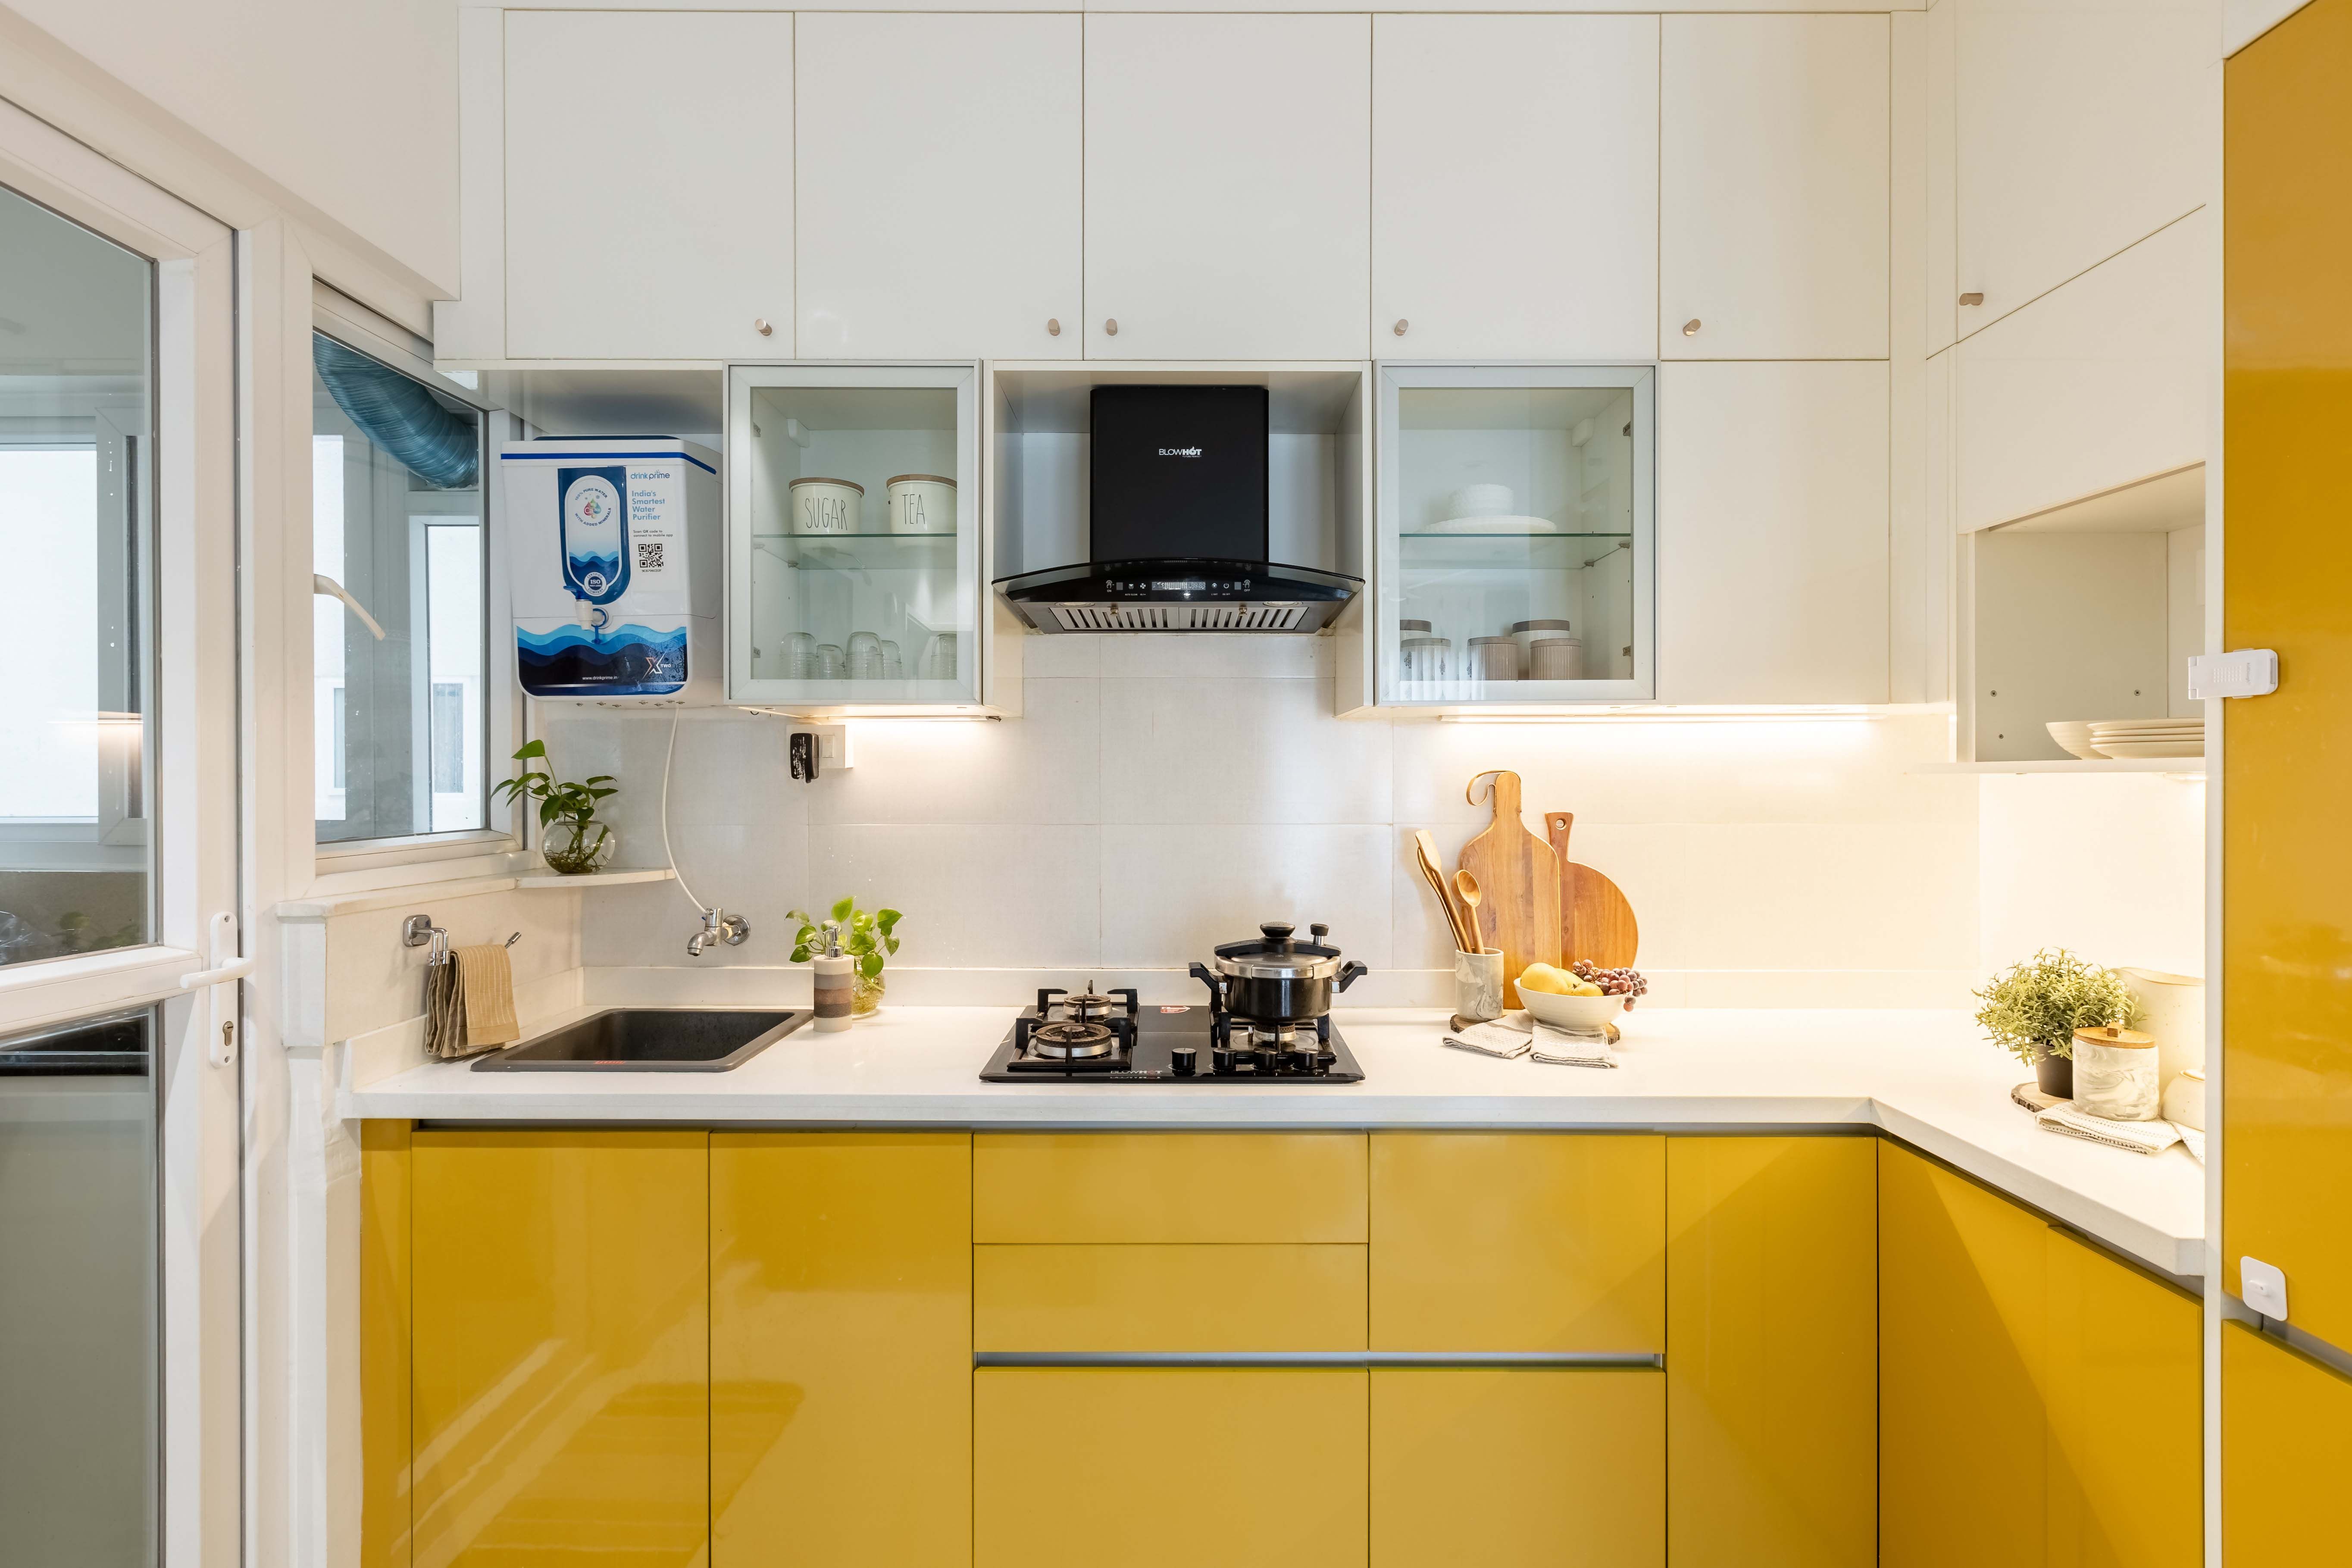 Modern Kitchen Design With A White Corian Countertop